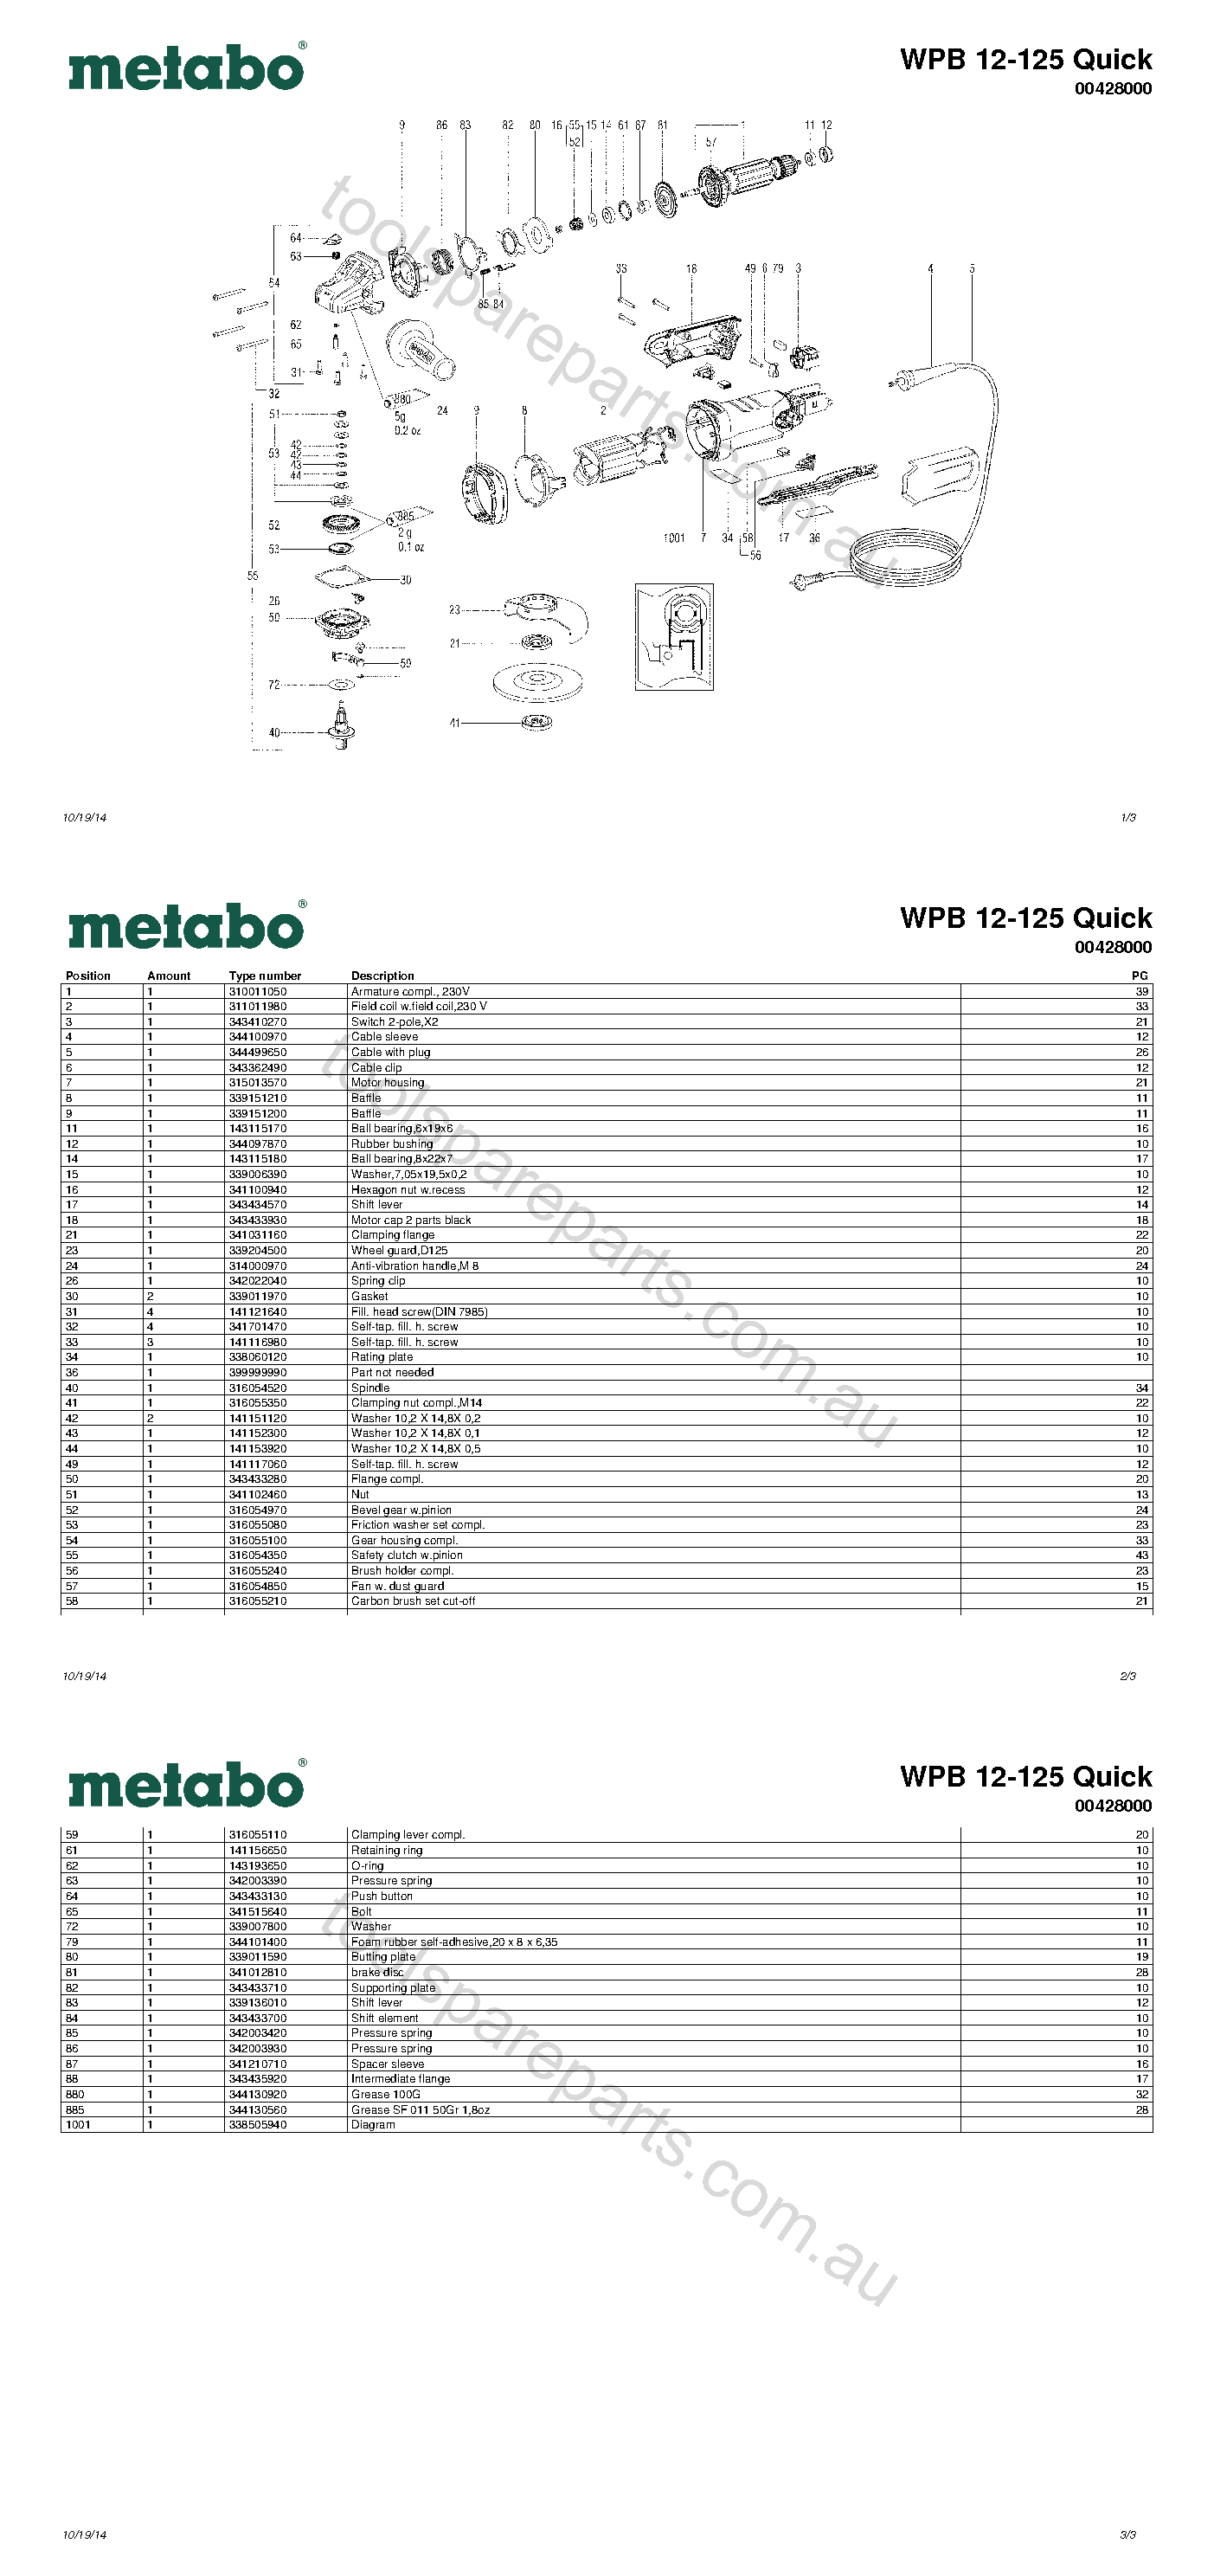 Metabo WPB 12-125 Quick 00428000  Diagram 1